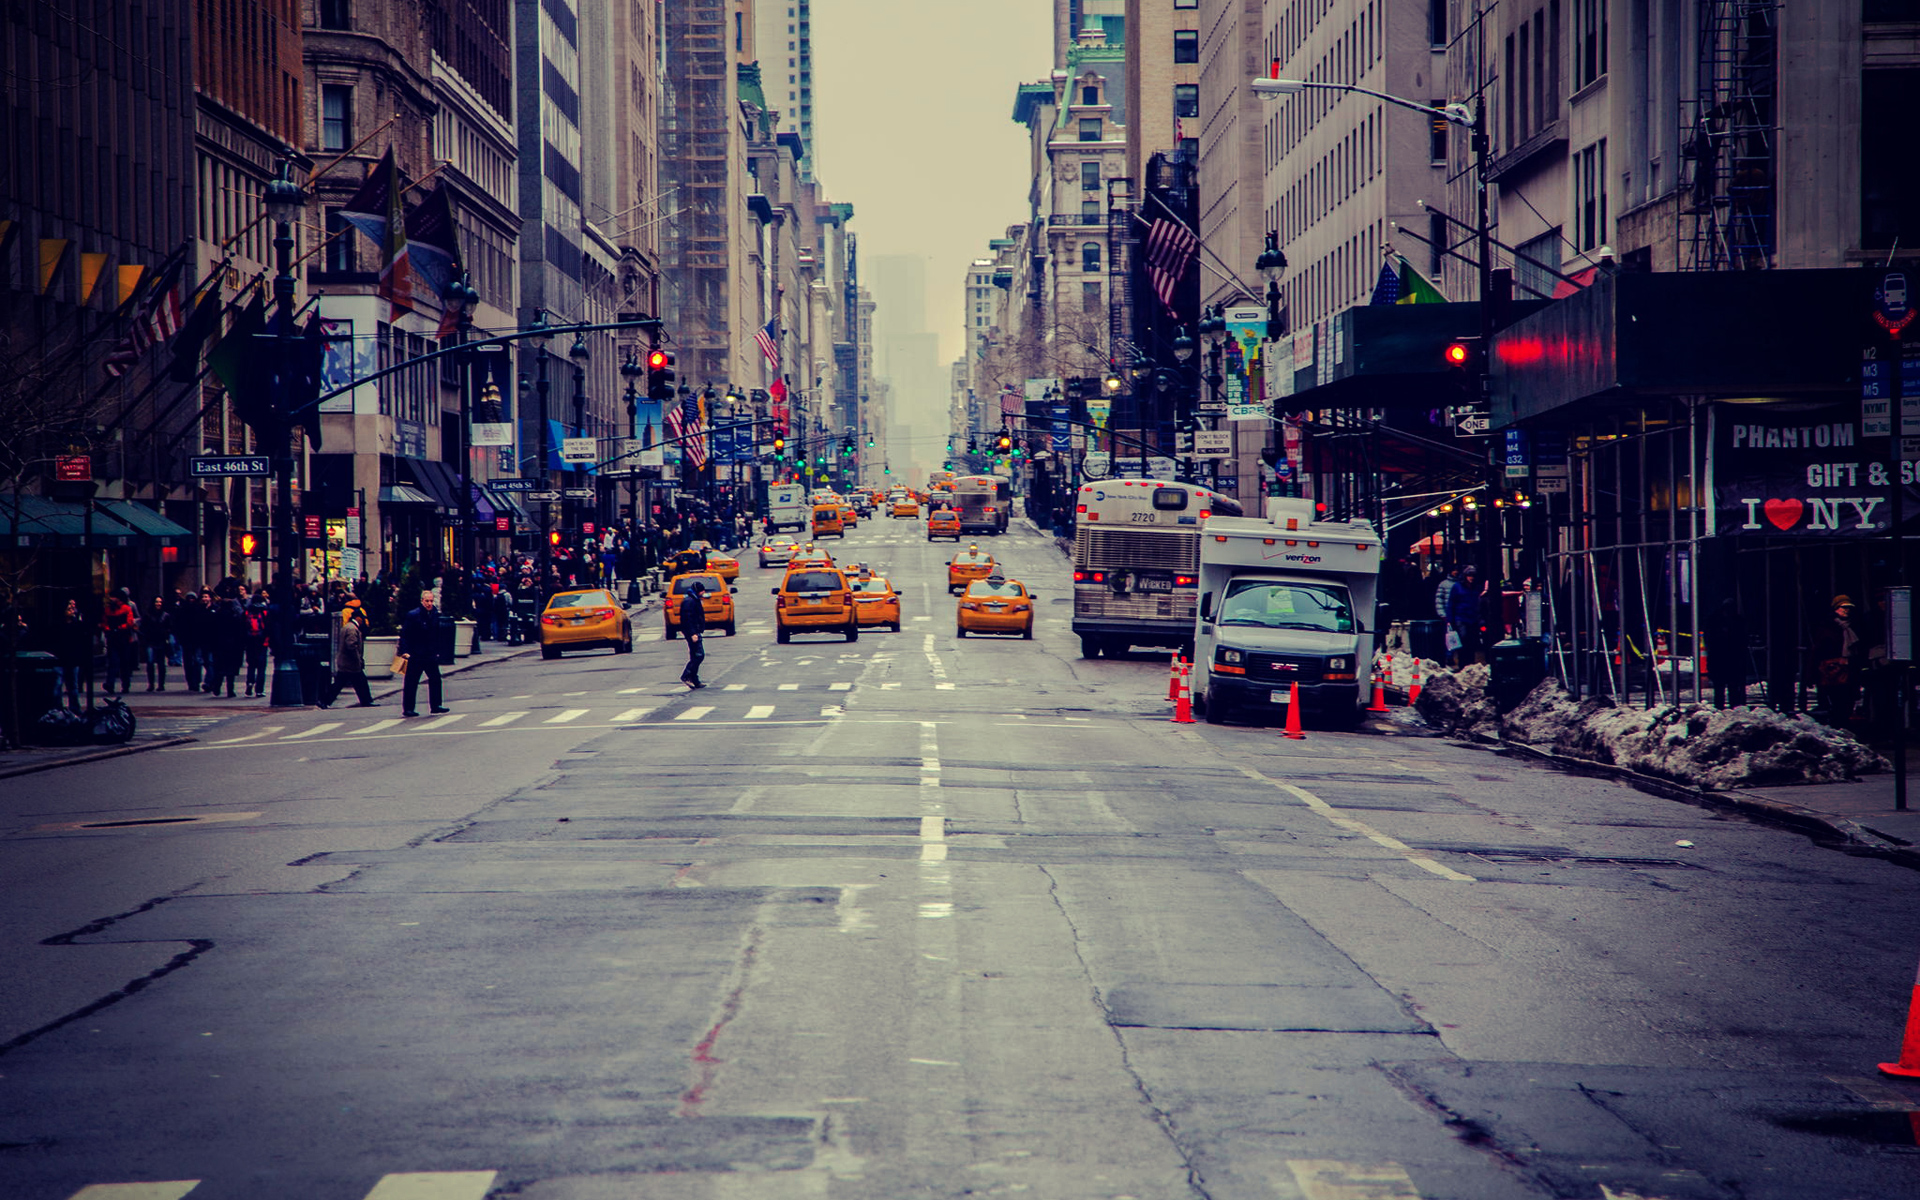 usa, man made, new york, building, city, street, taxi iphone wallpaper